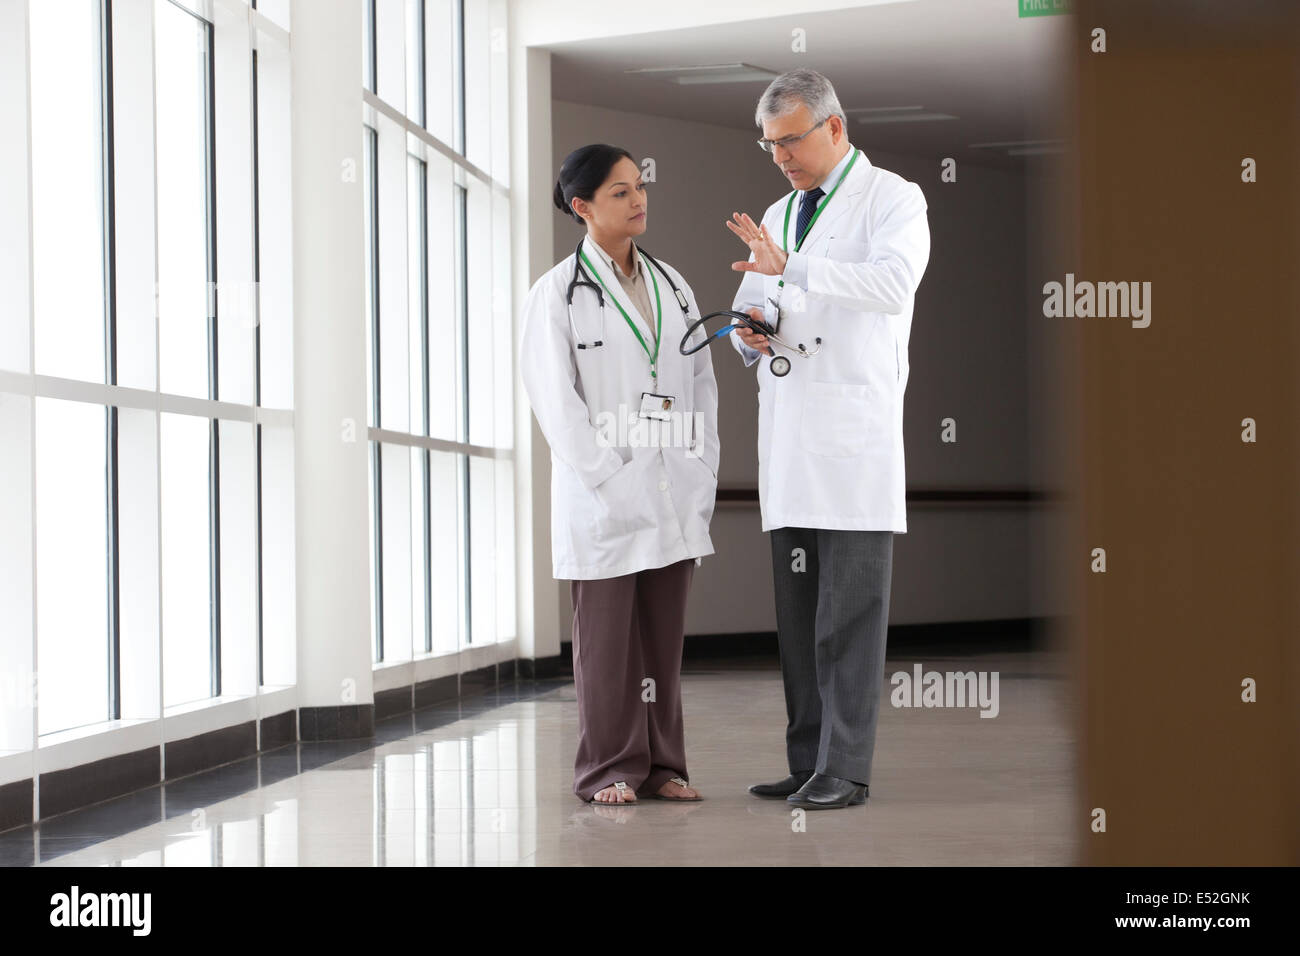 Two Doctors Talking In Corridor Of Hospital Stock Photo Alamy